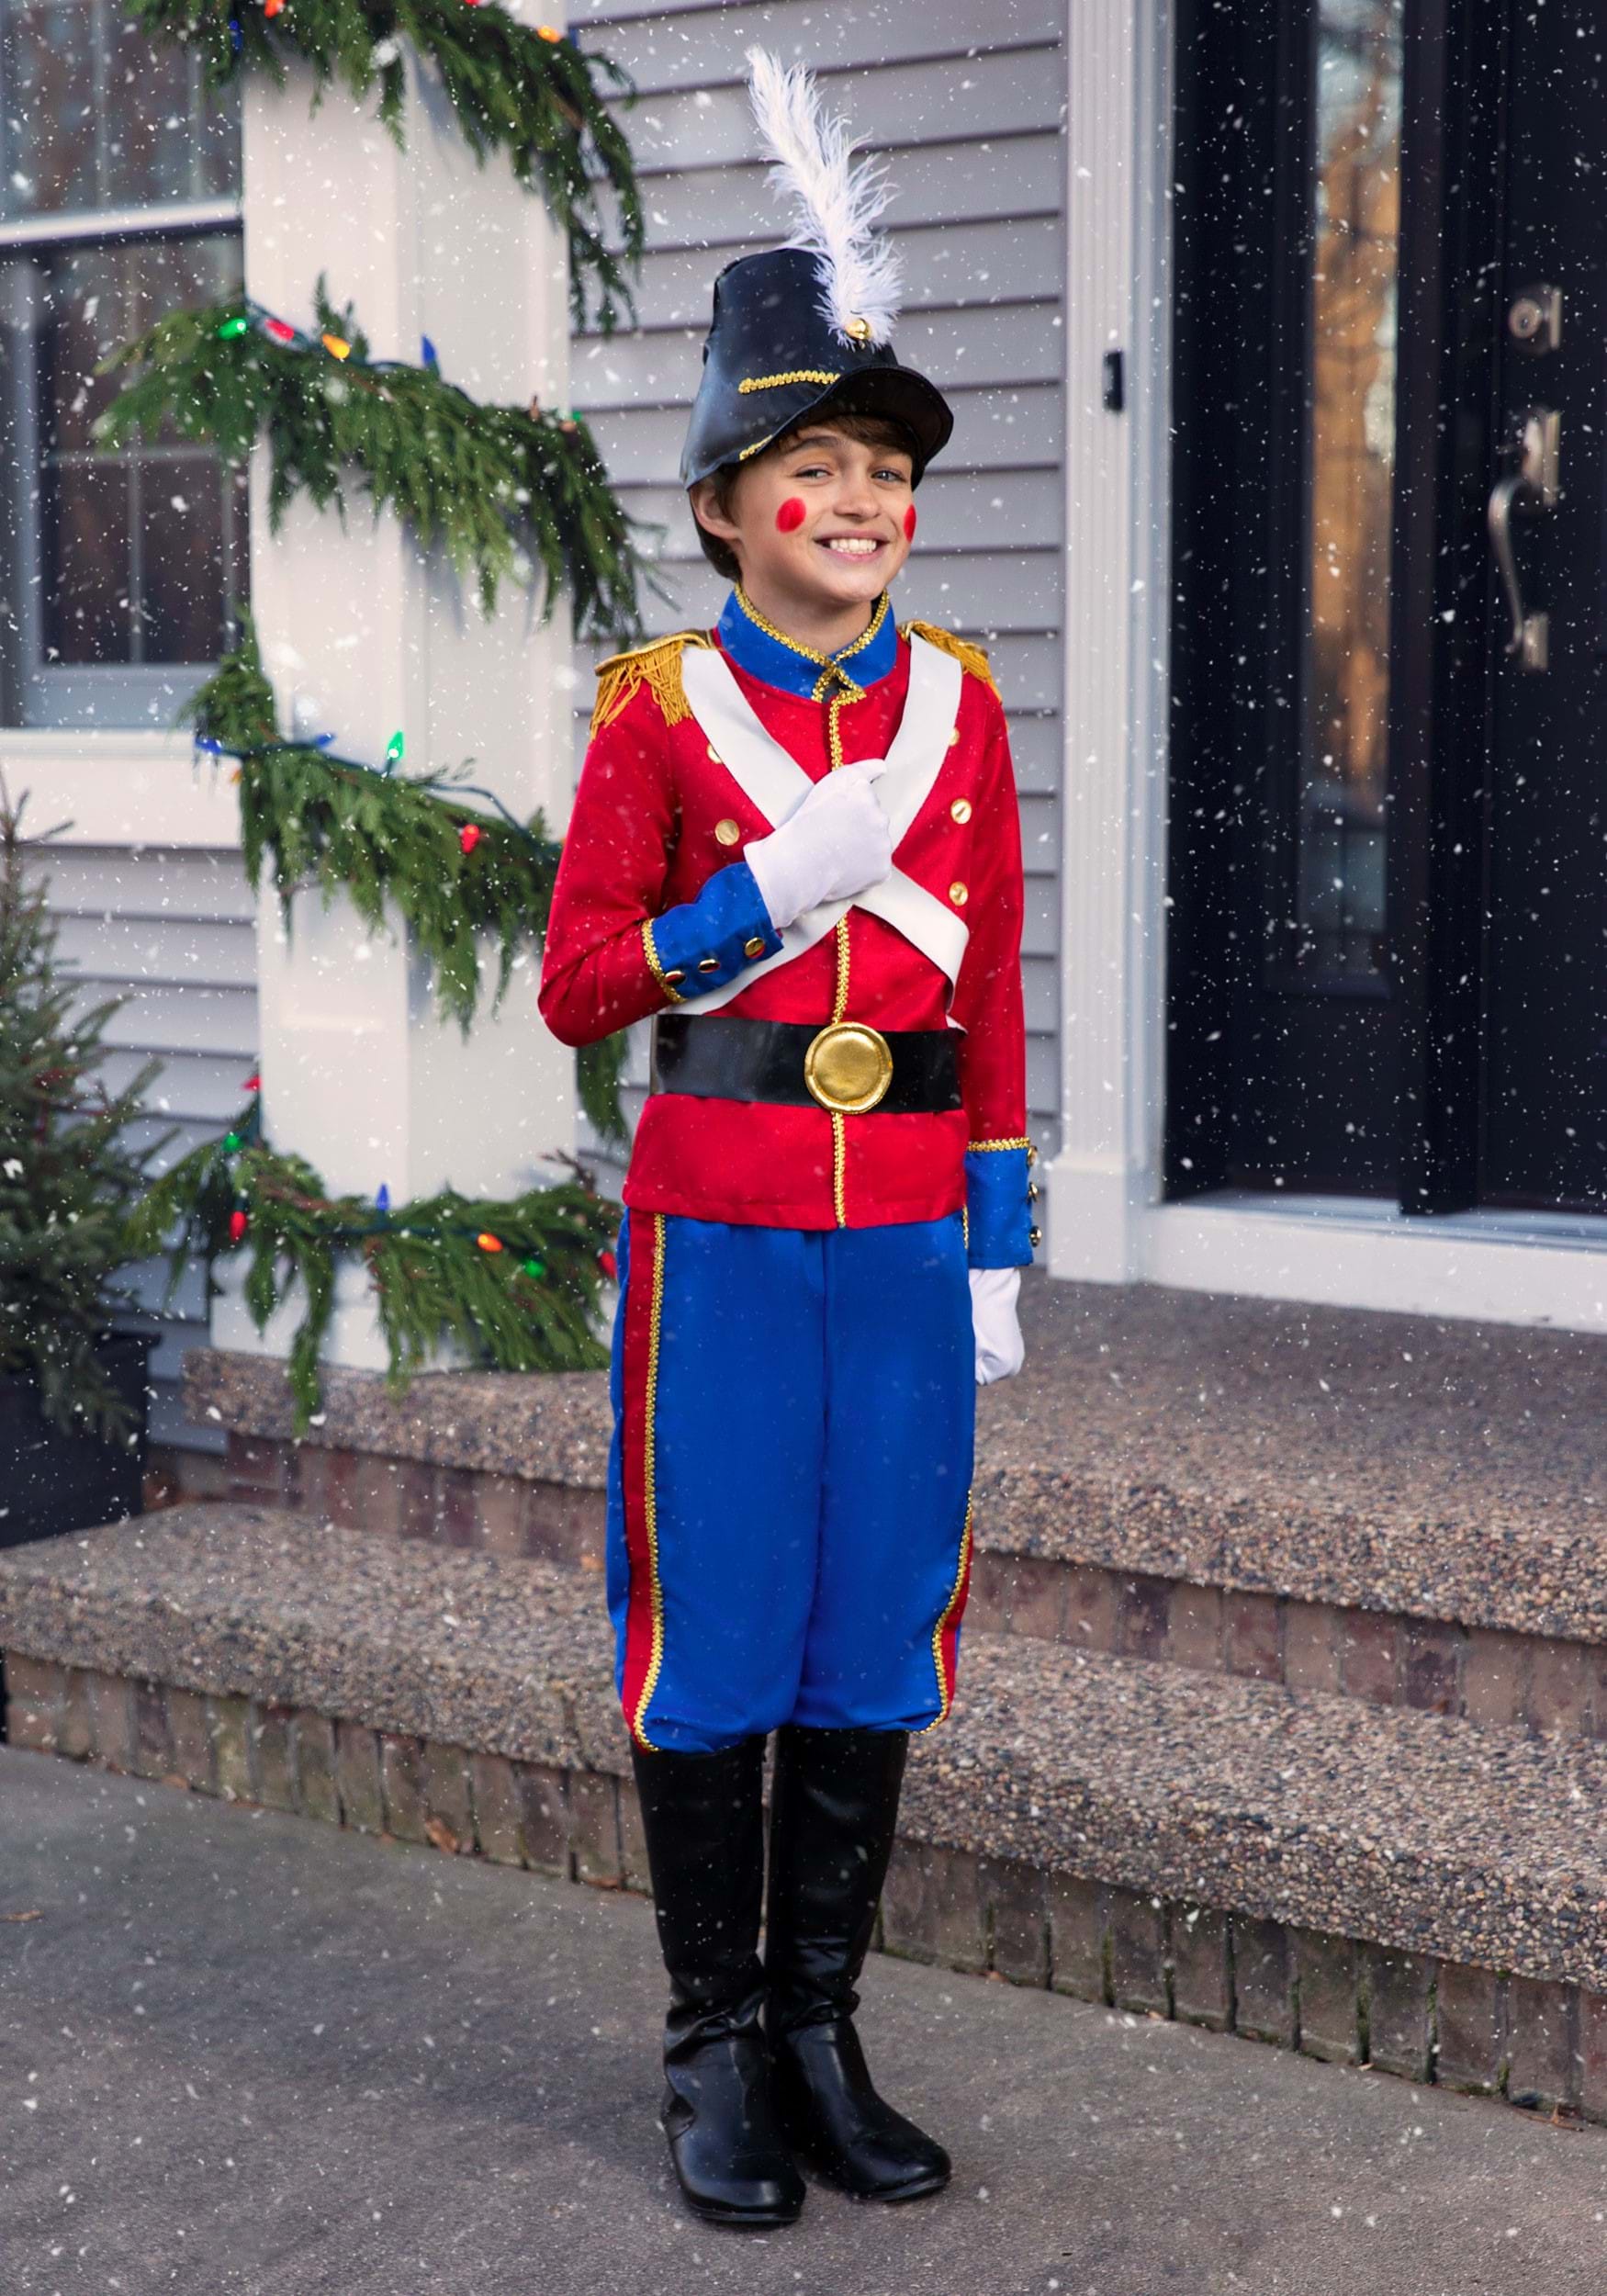 nutcracker toy soldier costume